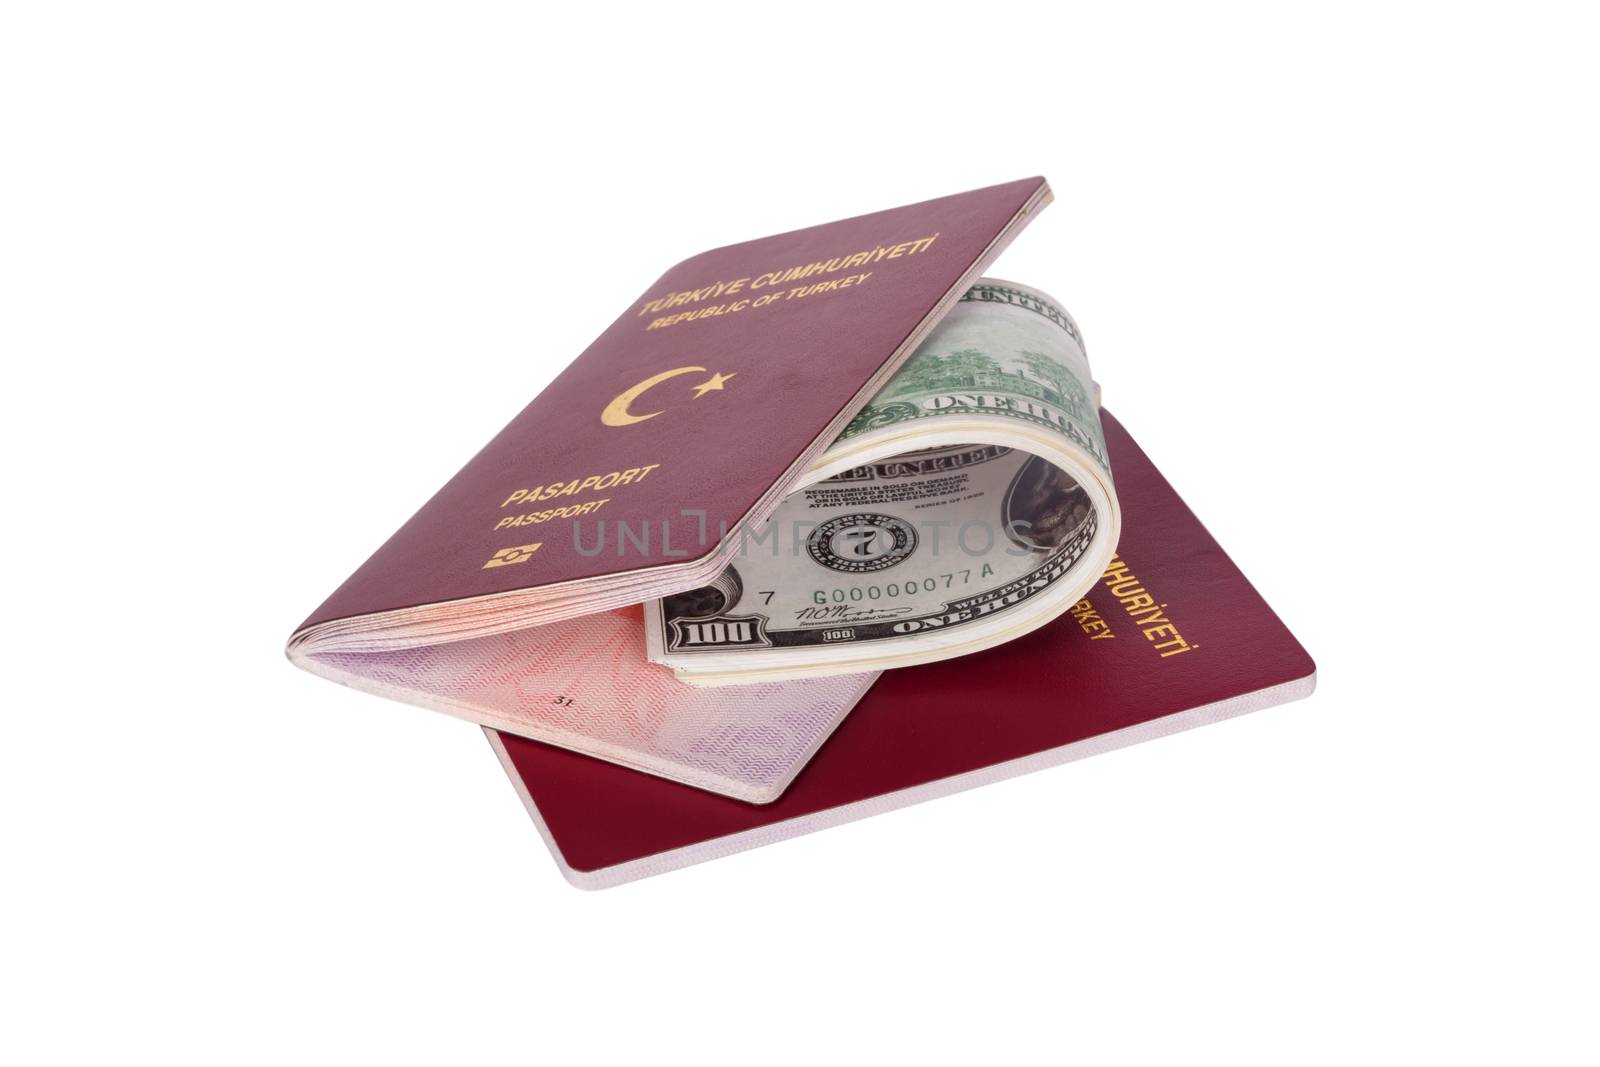 Passport and Dollar Money Banknotes by niglaynike